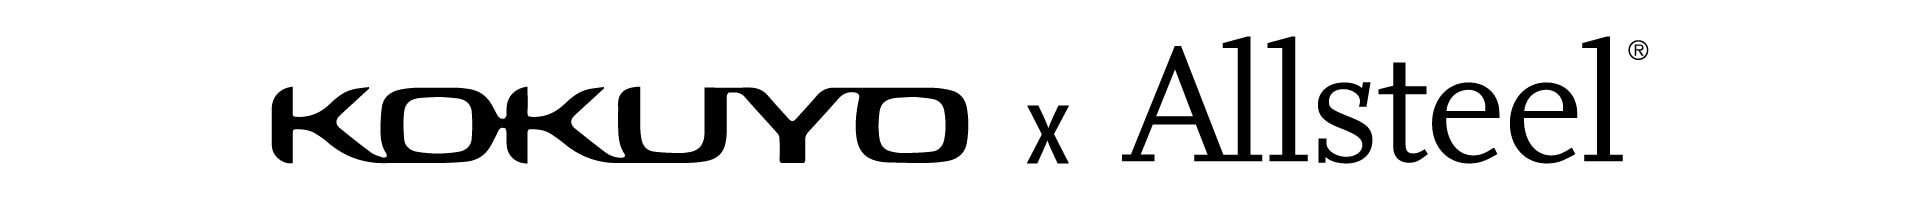 Kokuyo x Allsteel Logo